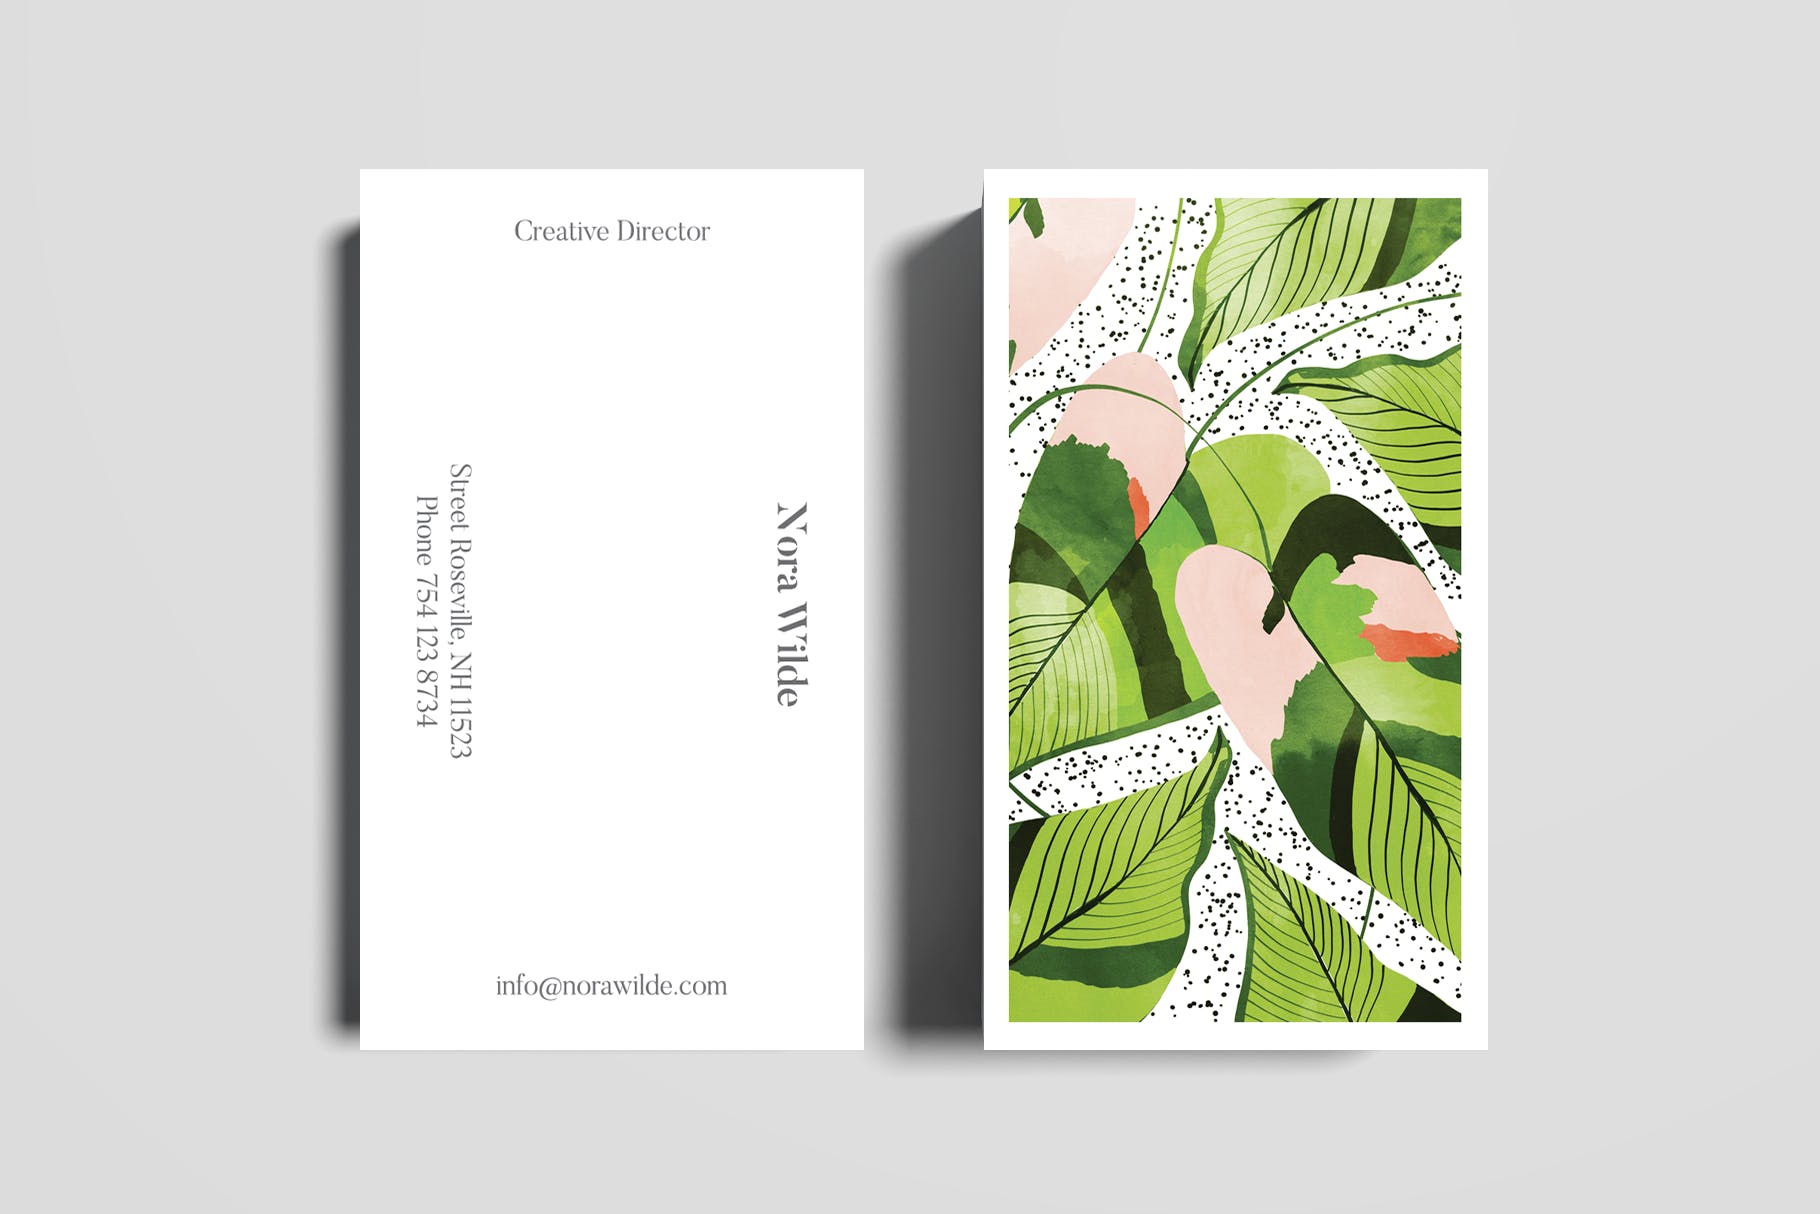 香蕉叶手绘艺术明信片&企业名片设计模板 Blushing Leaves Art & Stationary Kit插图(3)